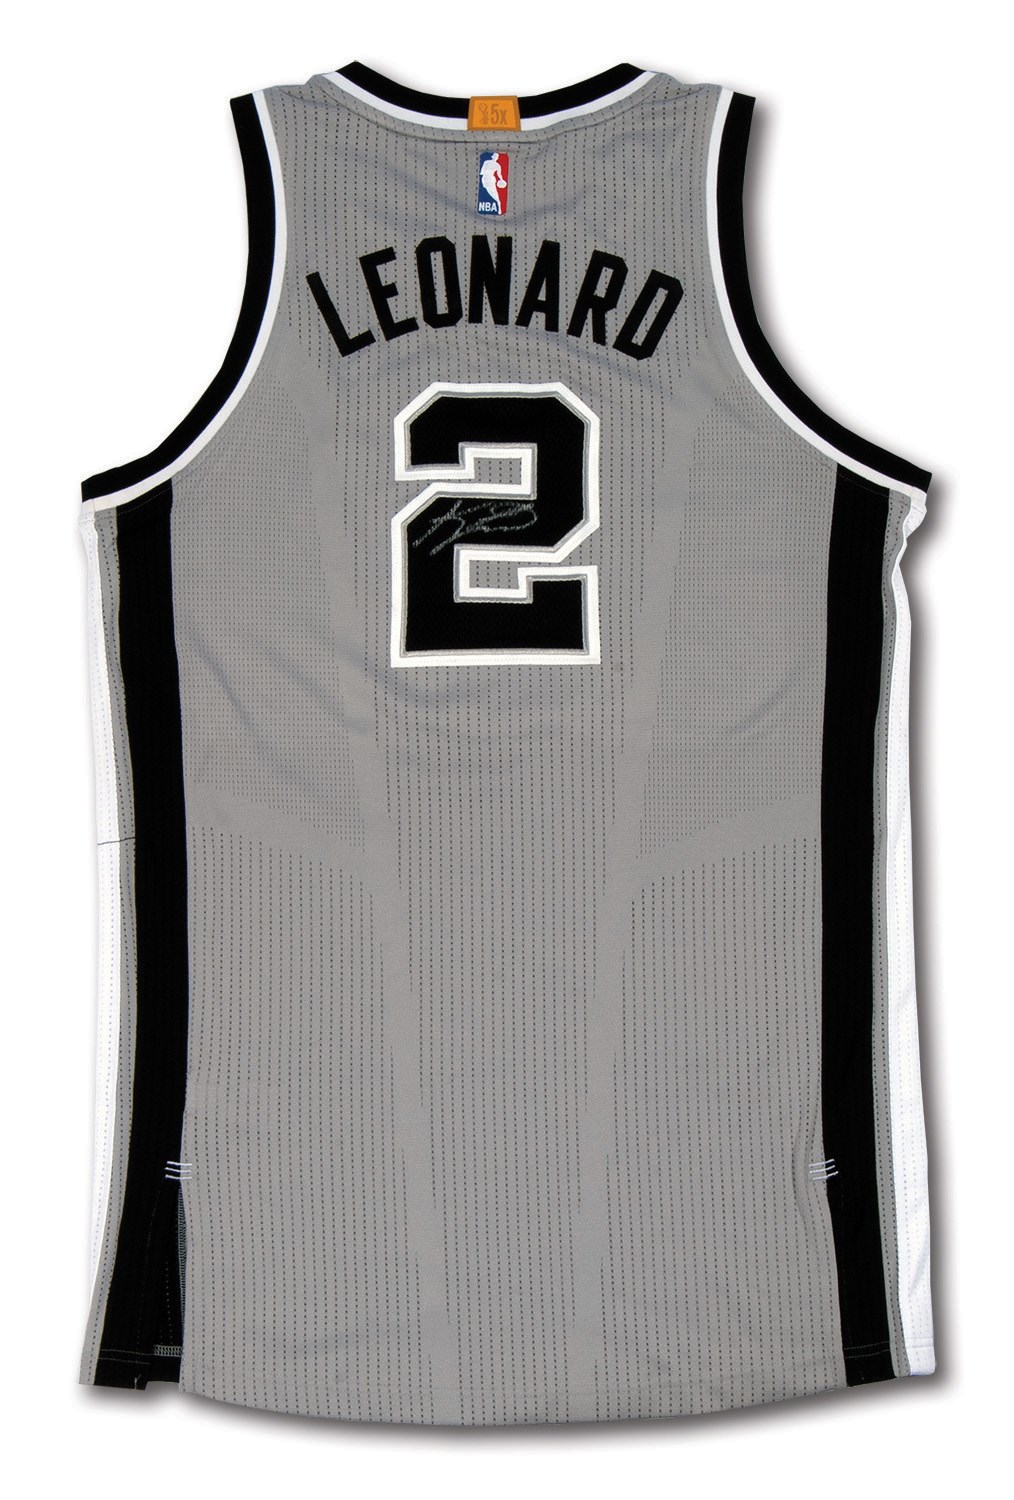 Kawhi Leonard - San Antonio Spurs - 2018 NBA Playoffs Game-Issued Jersey